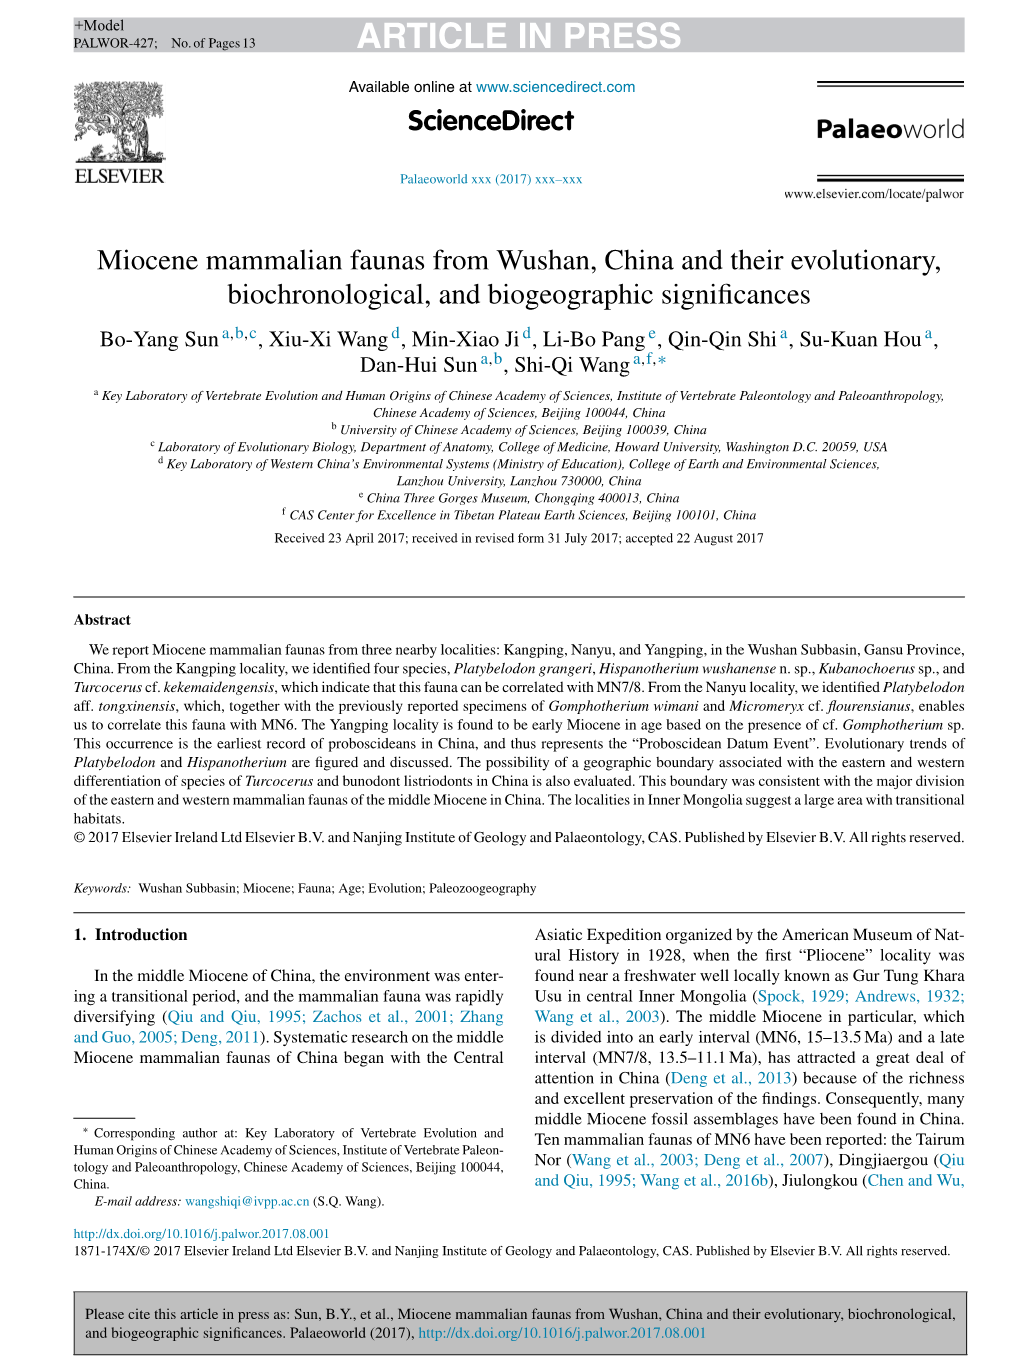 Miocene Mammalian Faunas from Wushan, China and Their Evolutionary